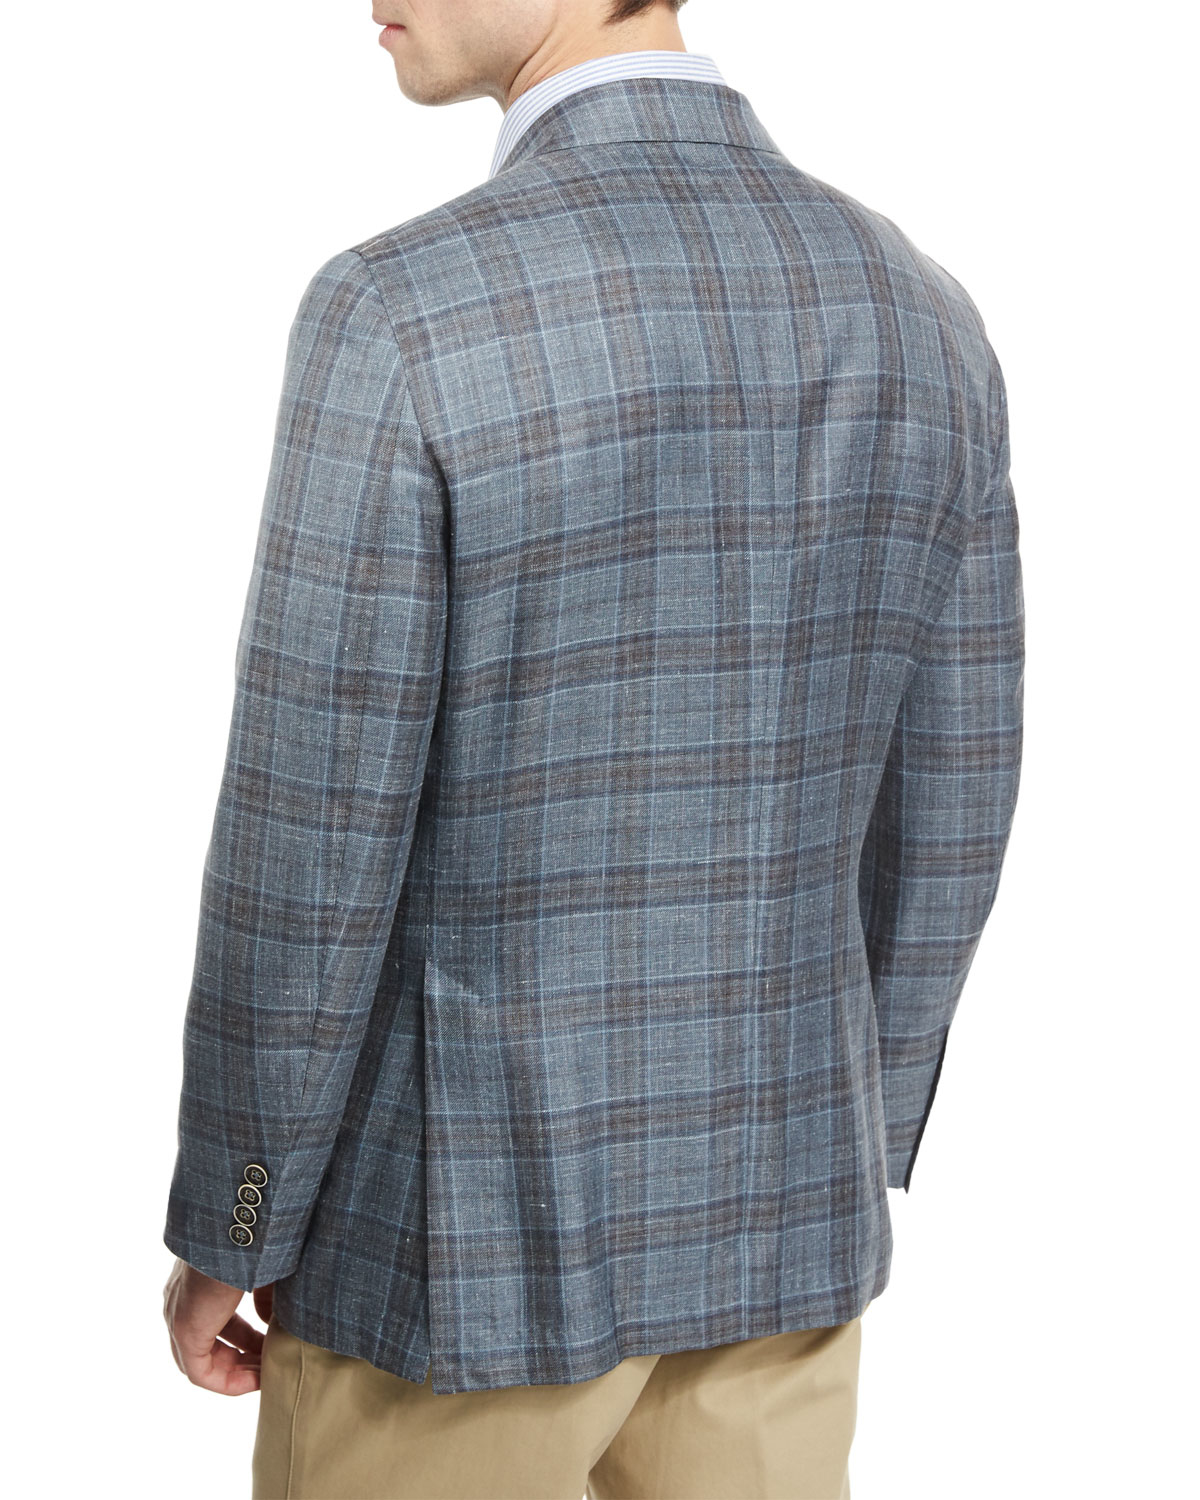 Peter Millar Shadow-plaid Wool-blend Sport Coat in Gray for Men - Lyst